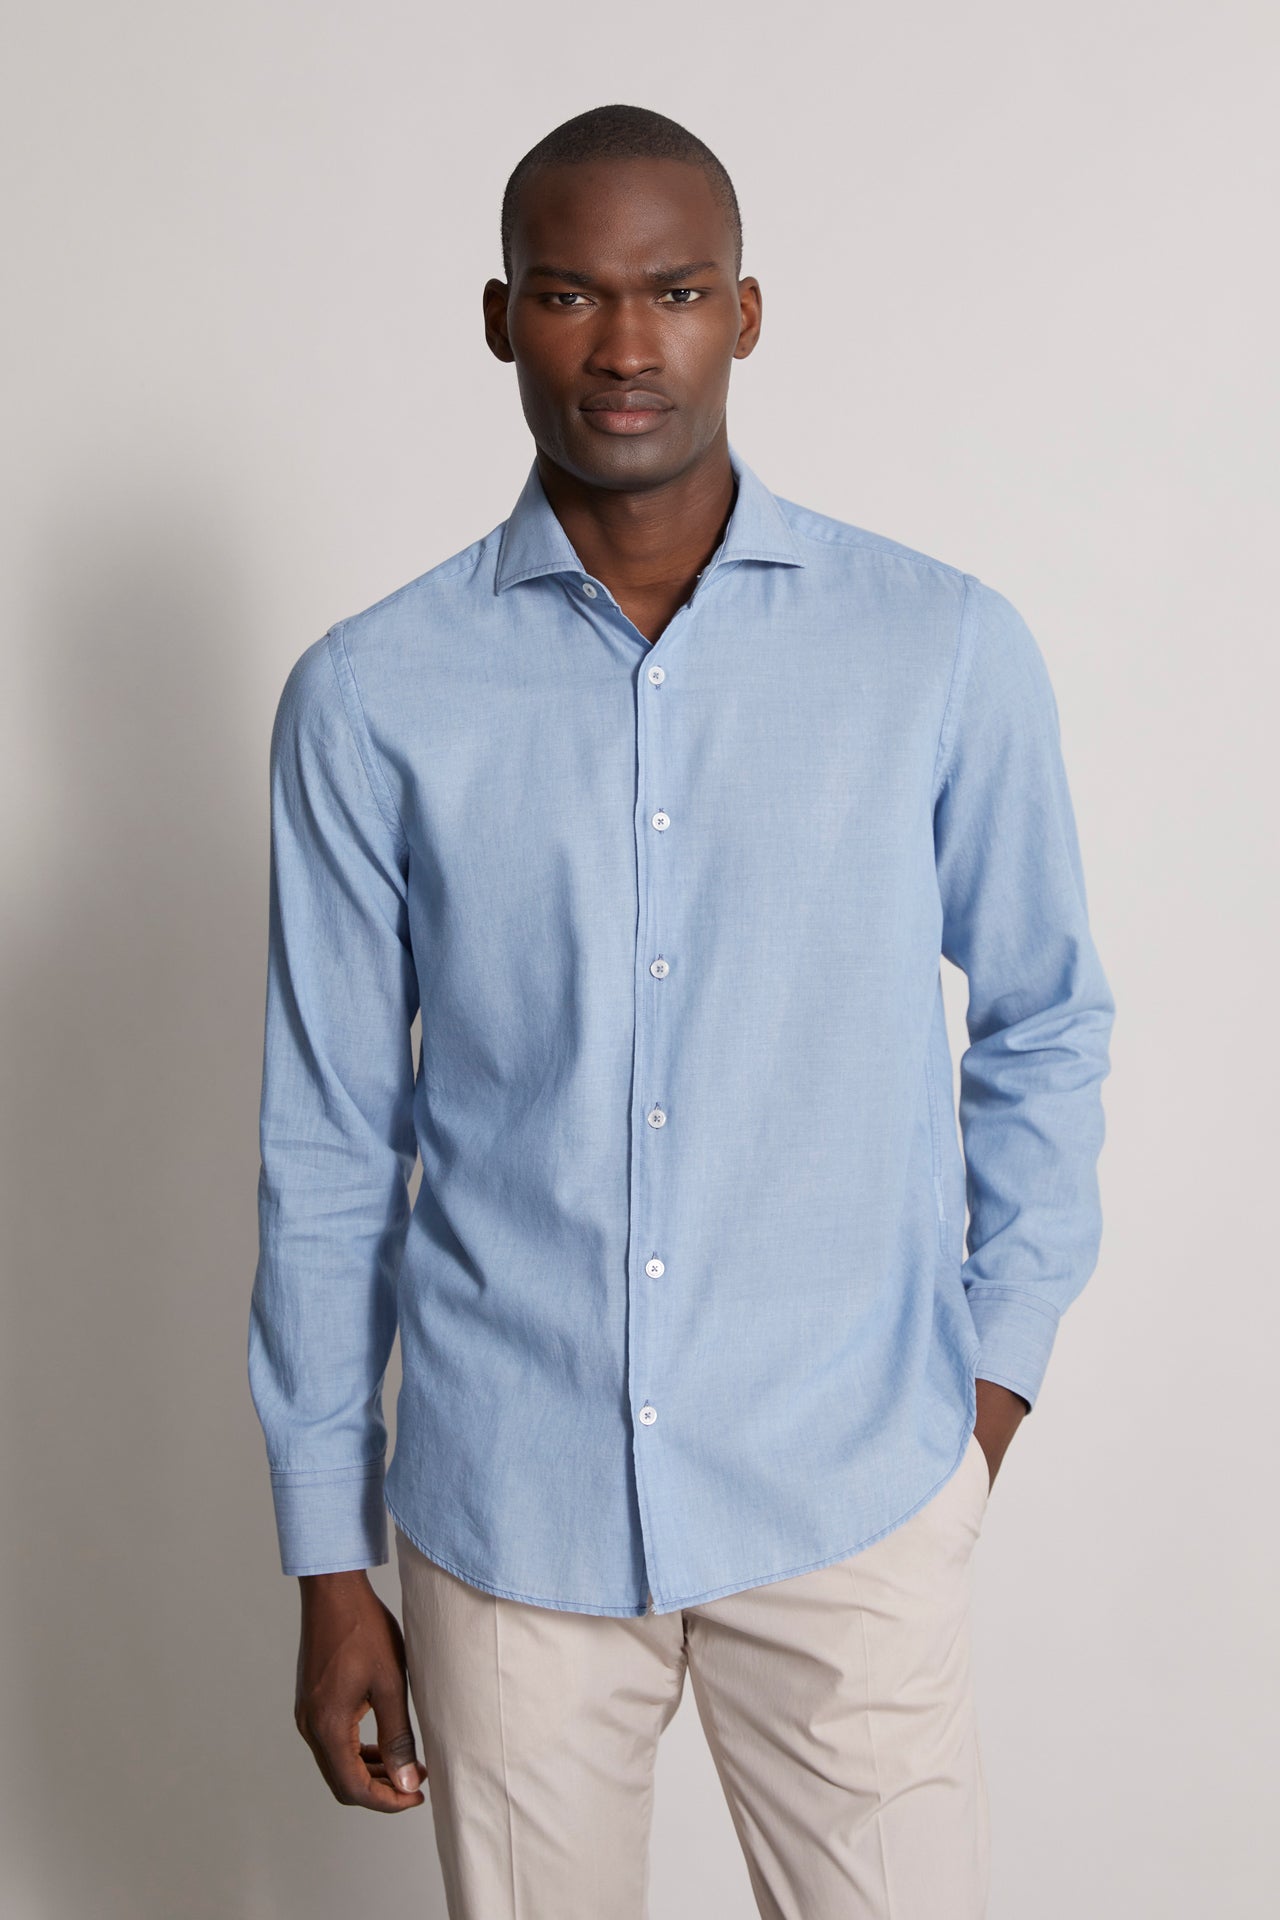 men's designer denim shirt with long sleeves in steel blue - front view